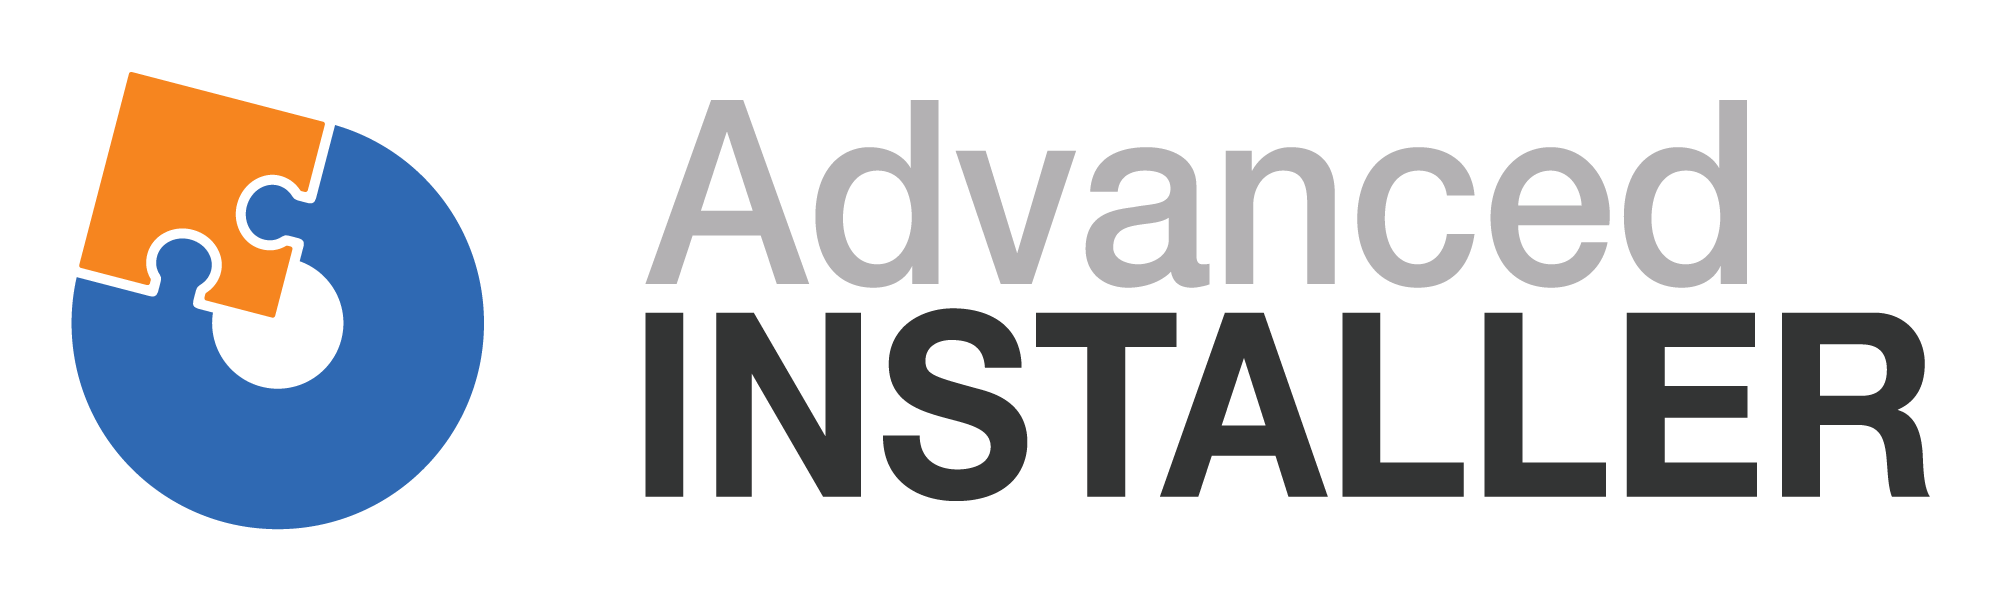 advanced_installer_logo.png